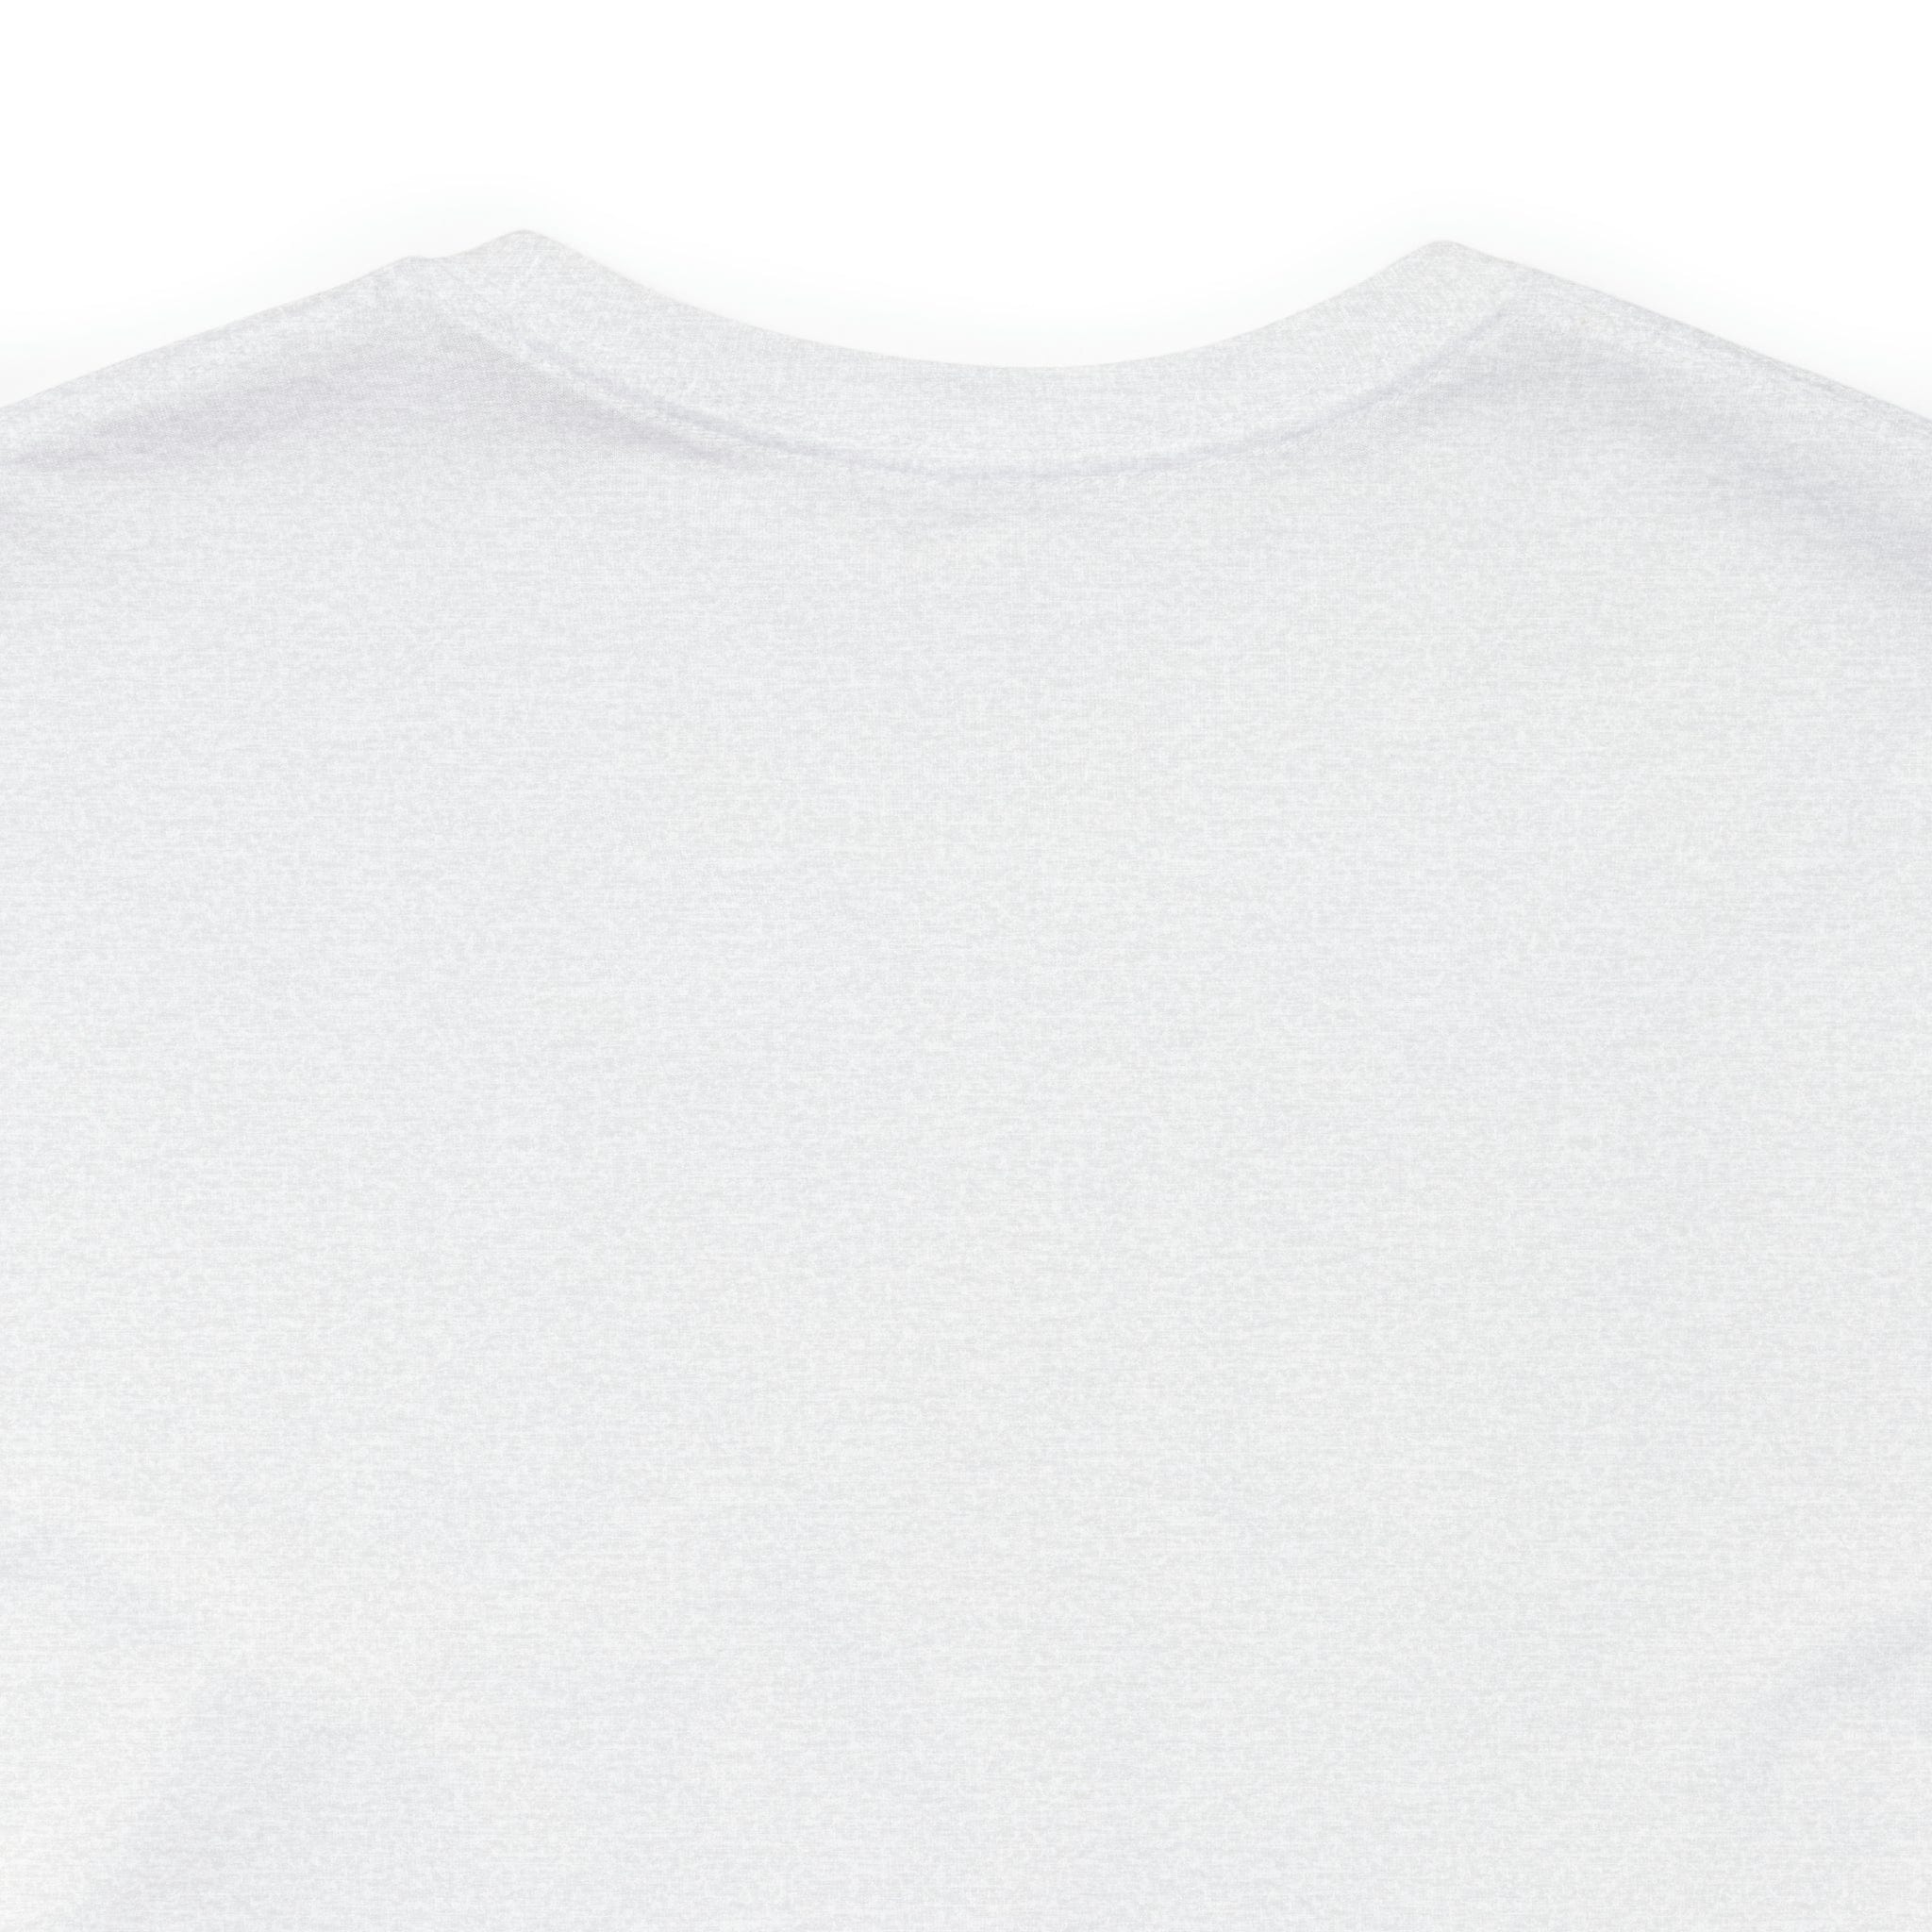 Printify T-Shirt Super Mom Heart - Jersey Short Sleeve Tee